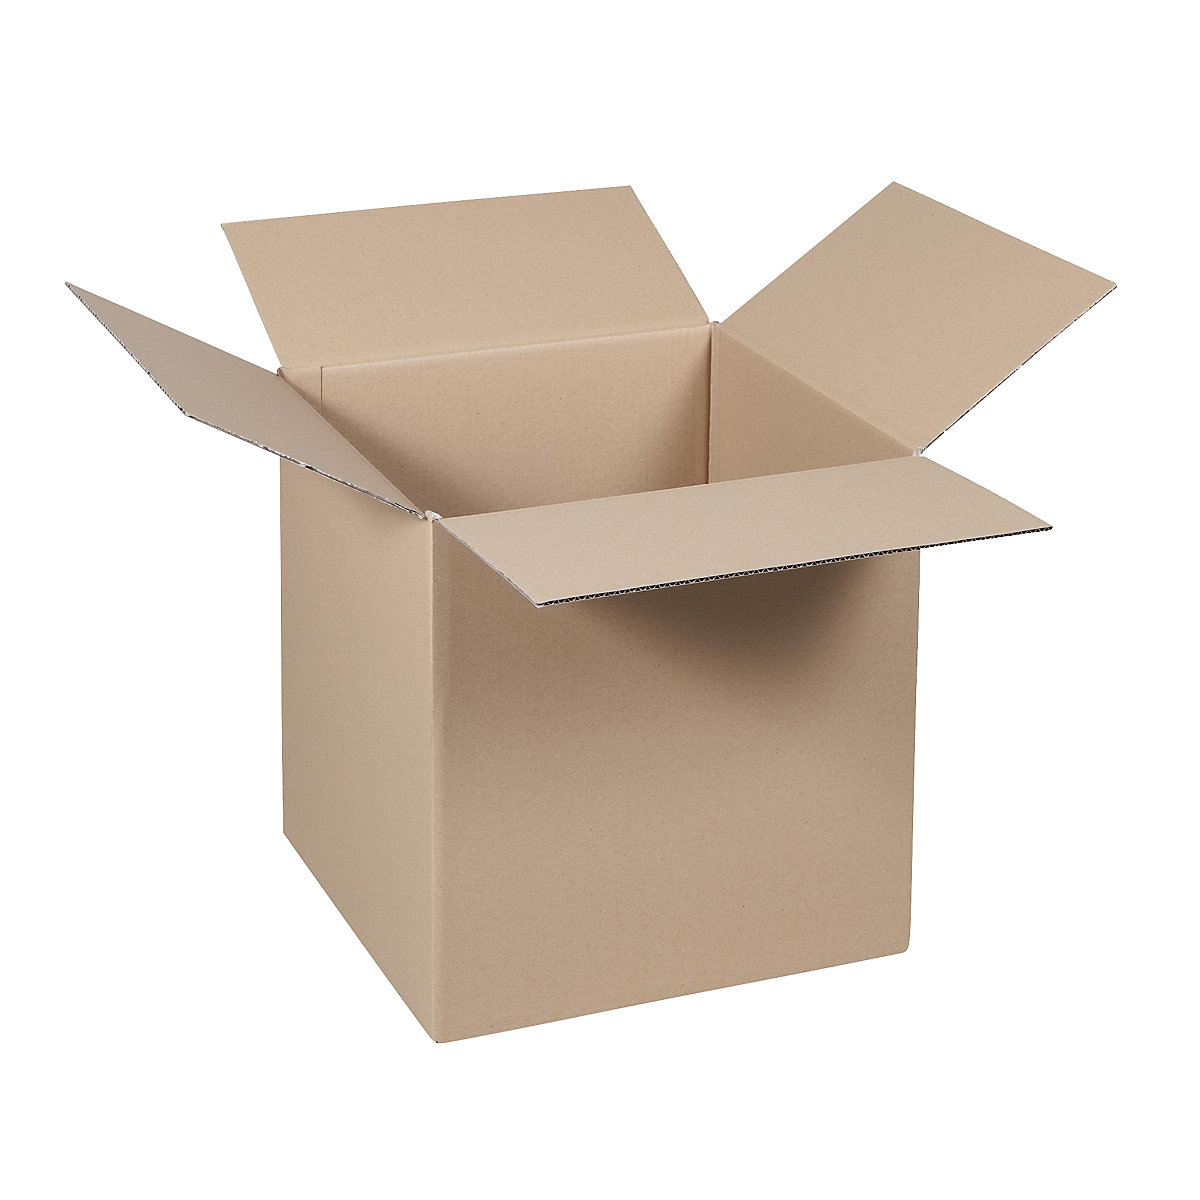 Folding cardboard box, FEFCO 0201, made of single fluted cardboard, internal dimensions 400 x 400 x 400 mm, pack of 100-1